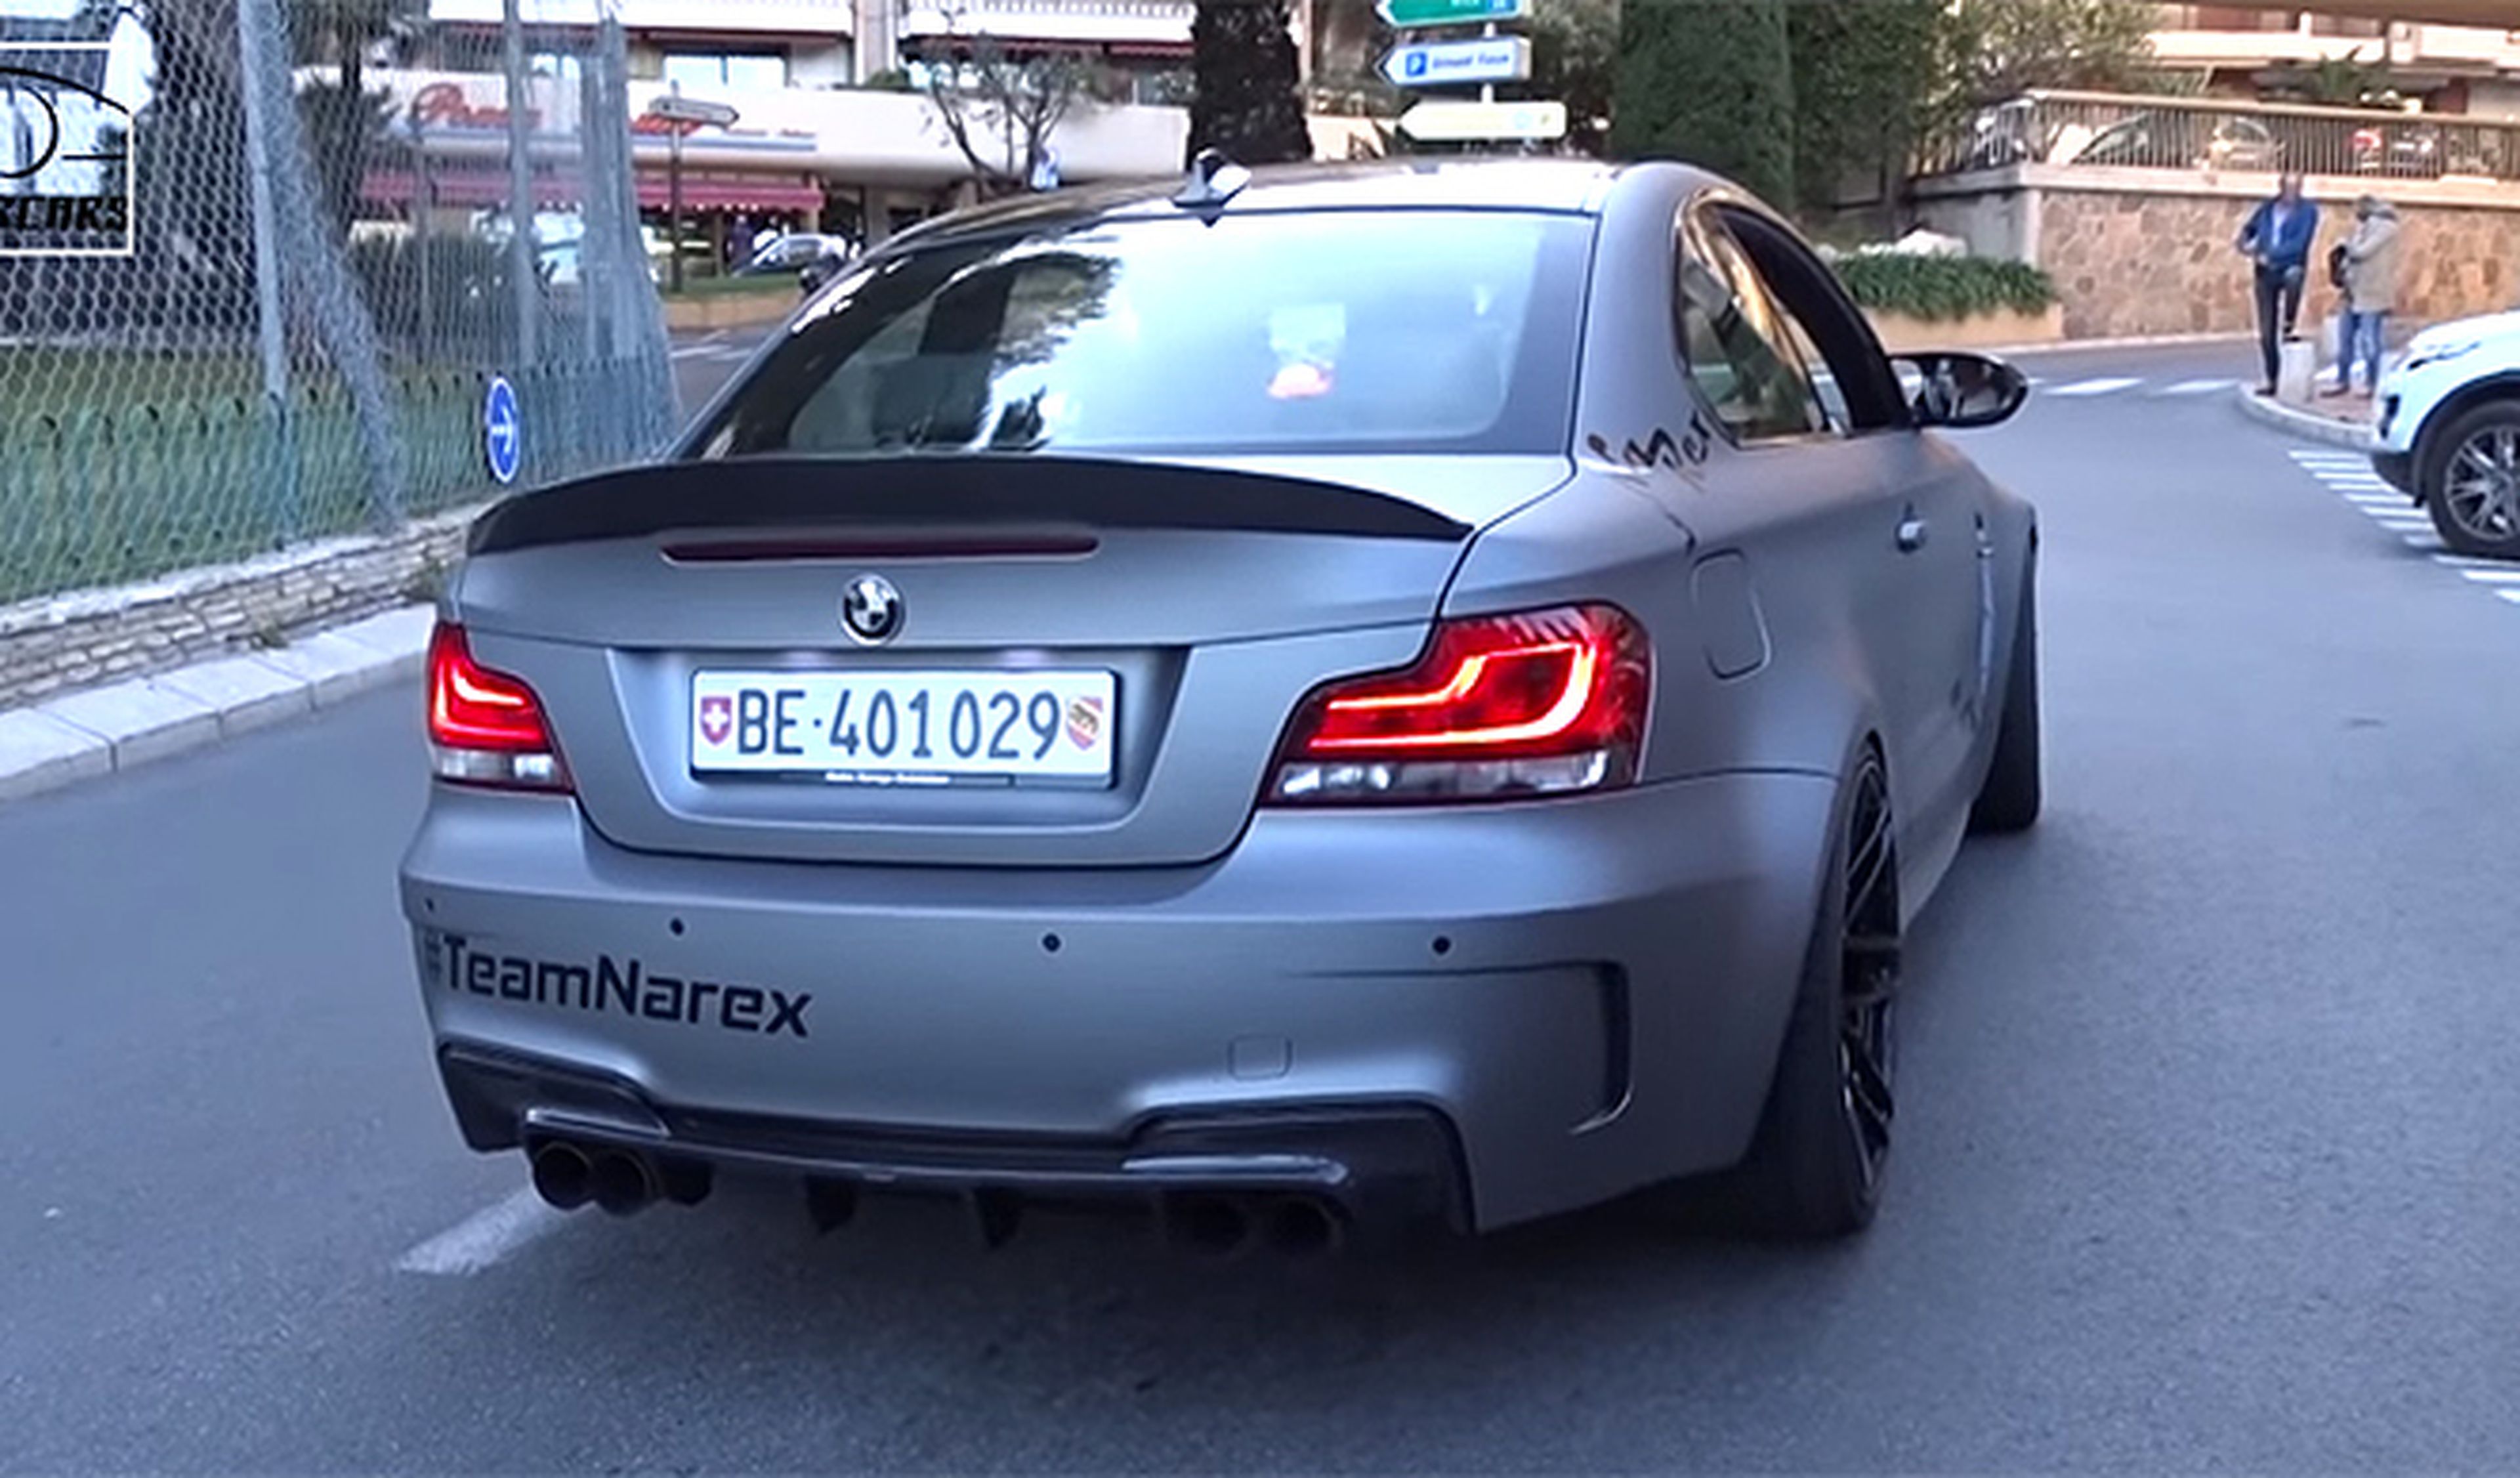 Vídeo: un BMW 1M hace temblar Mónaco